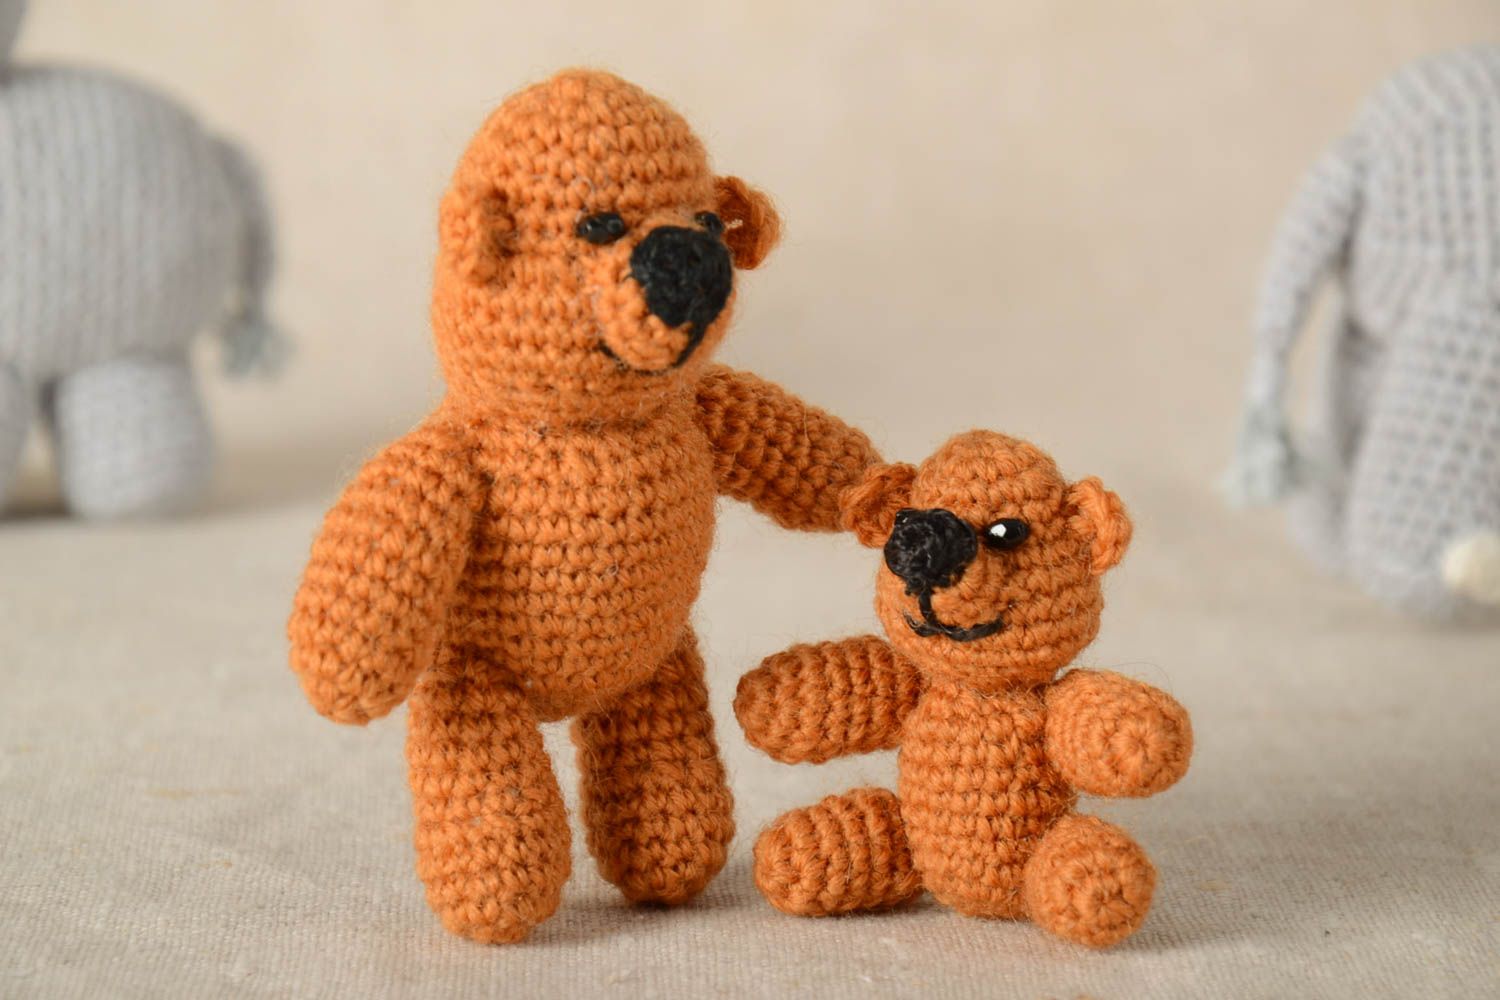 Crocheted cute toys soft bears textile toys presents for kids handmade toys photo 1